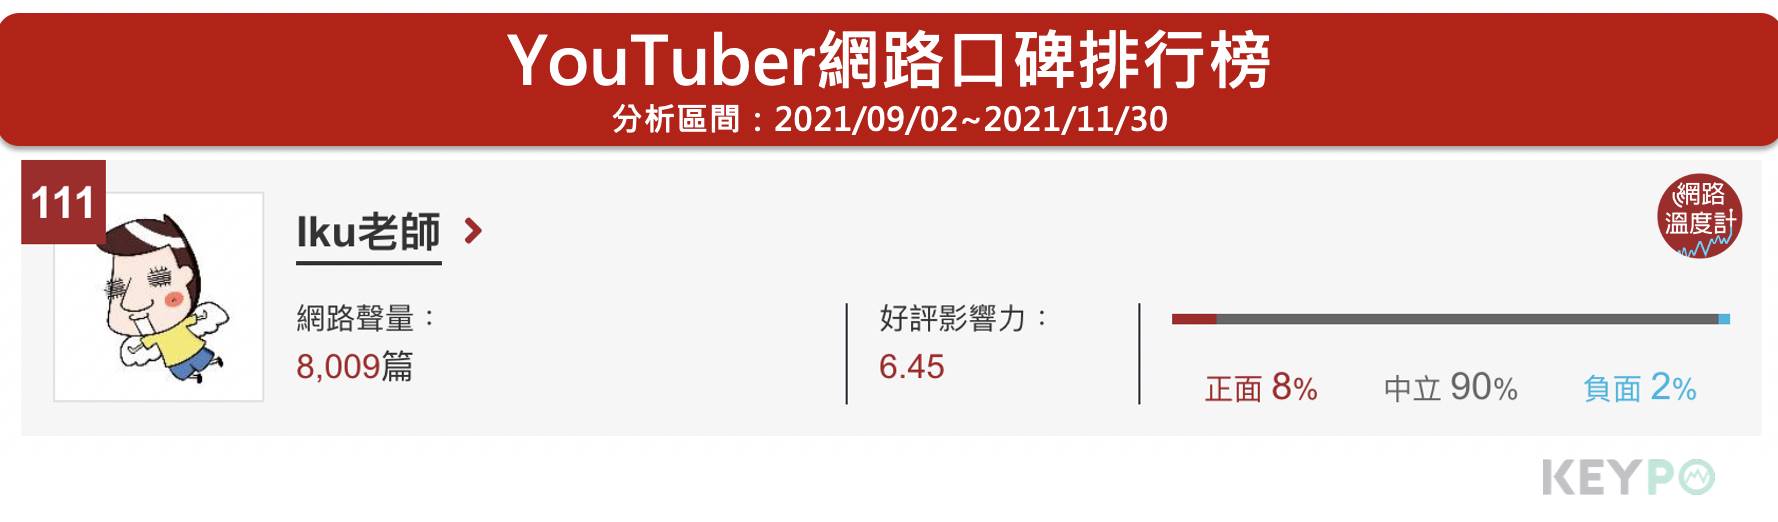 Iku老師位居網路溫度計的YouTuber網路口碑第111名